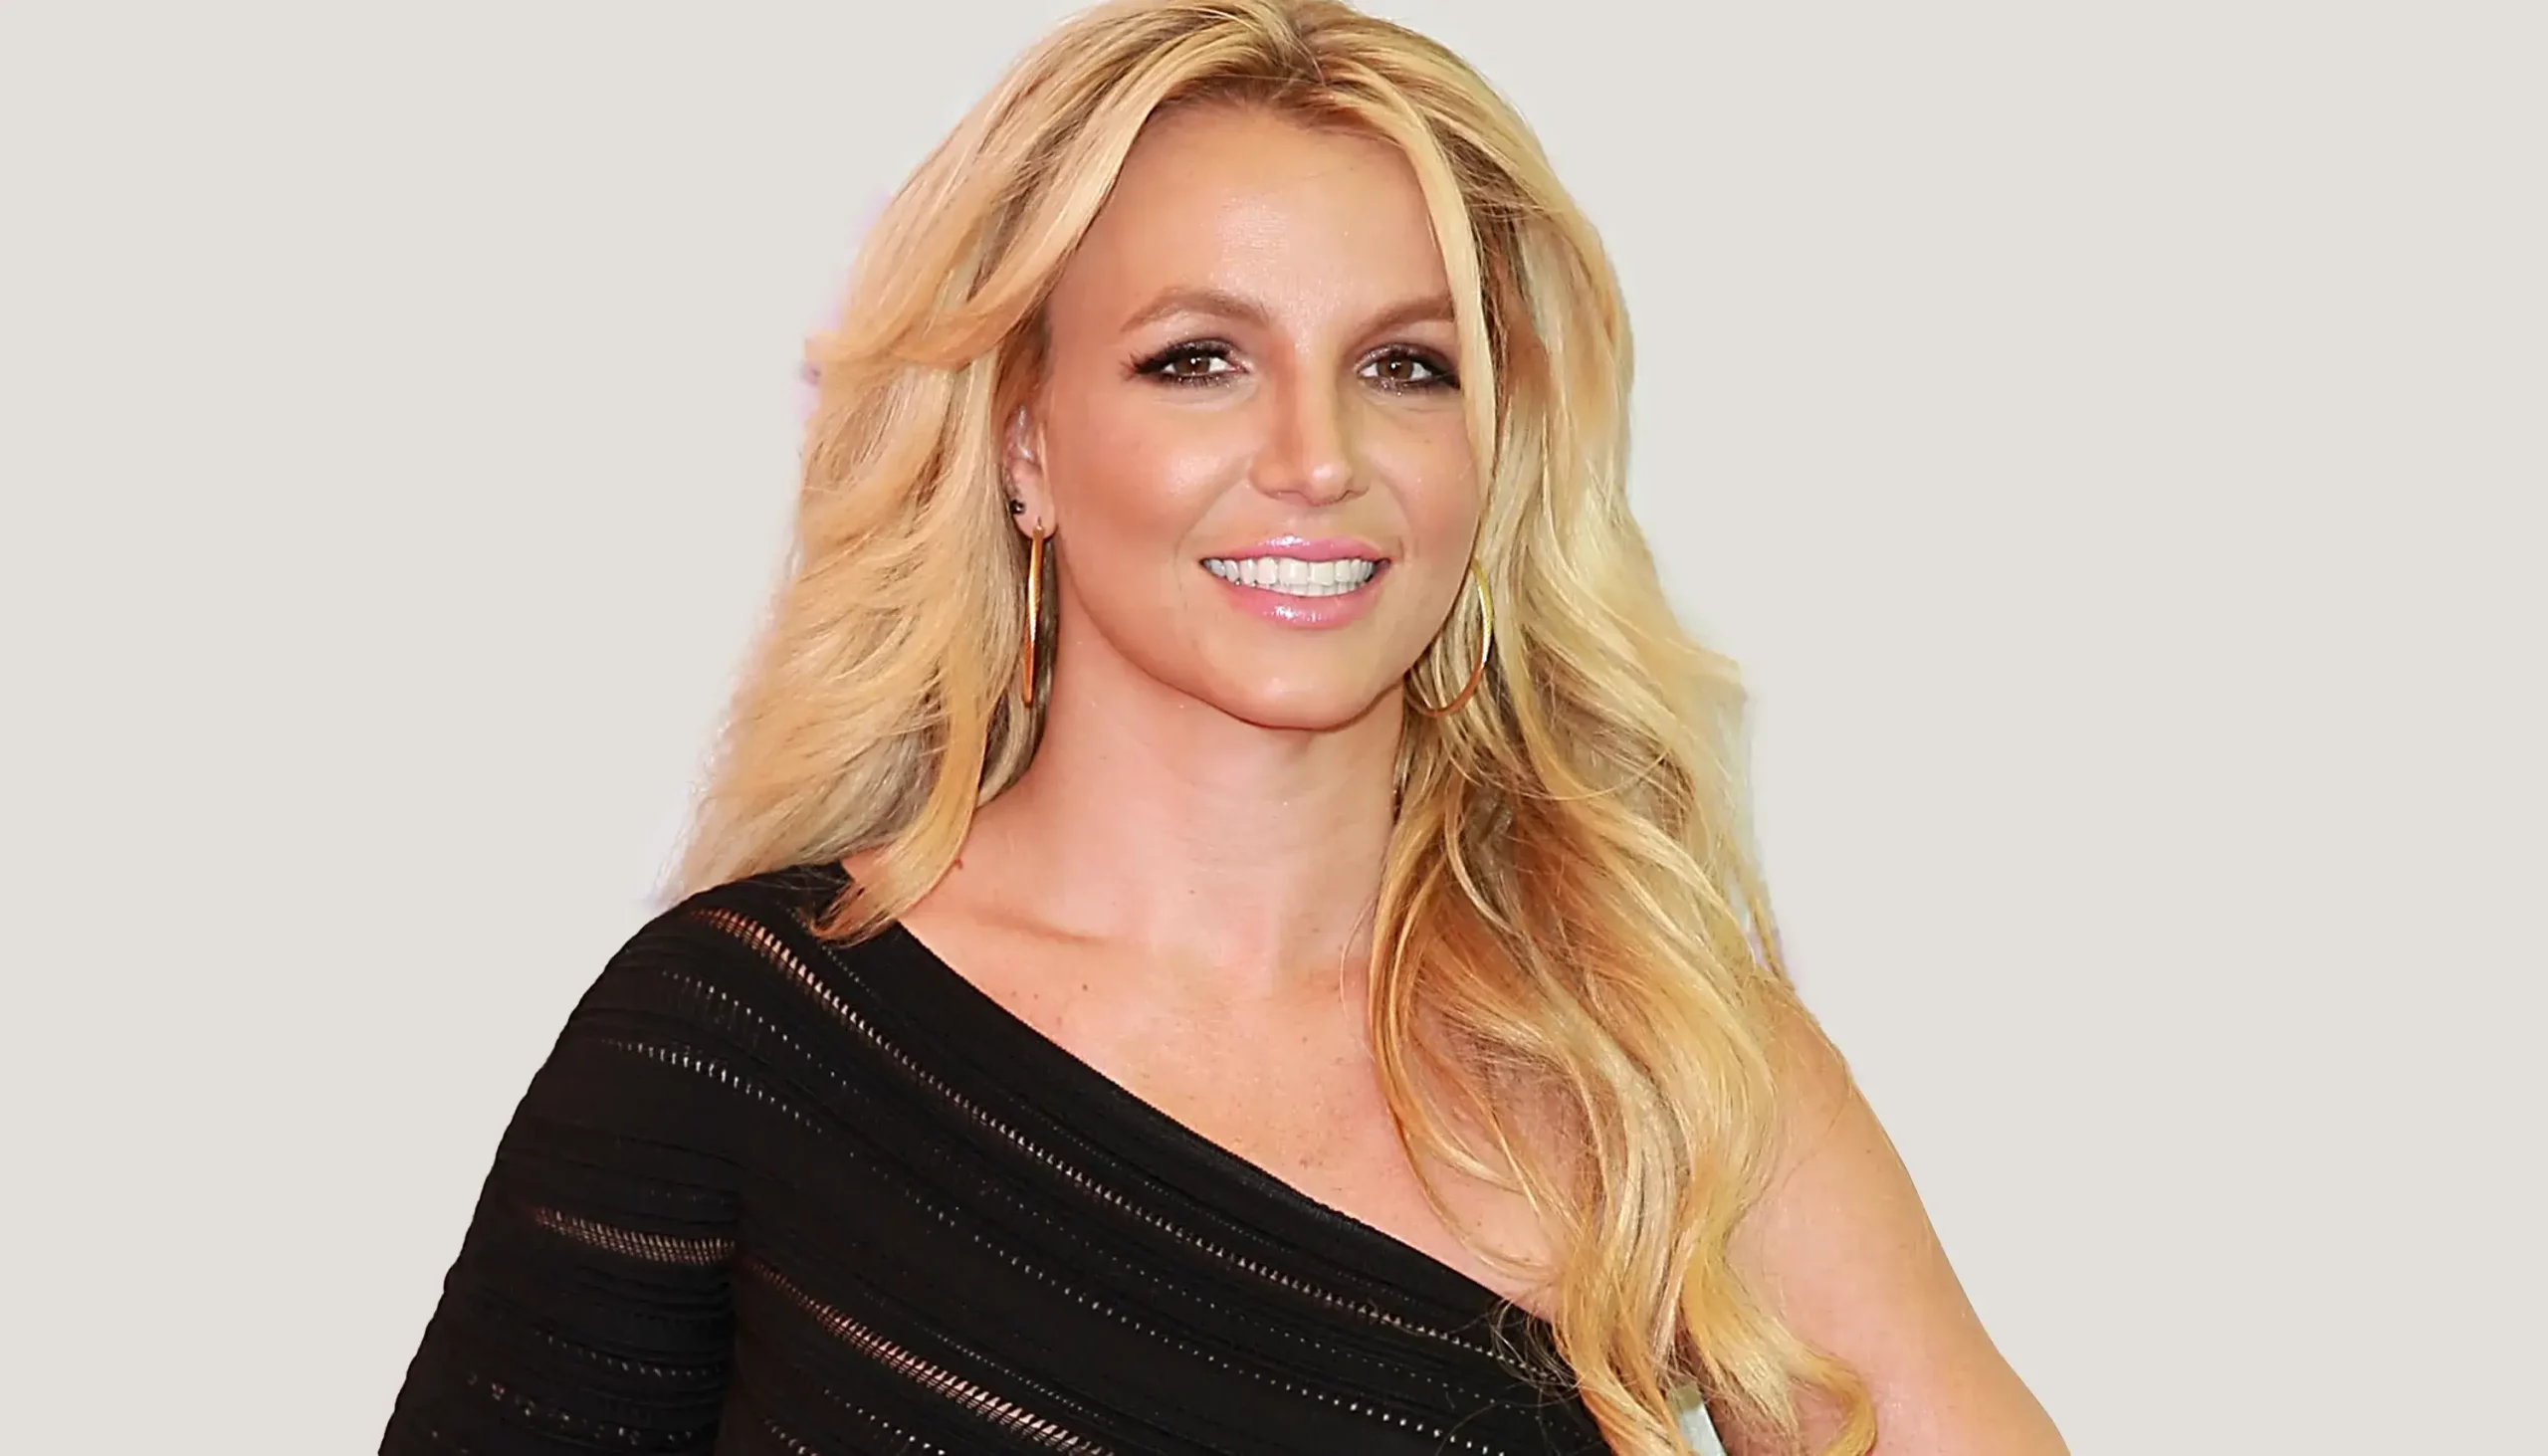 Pop star Britney Spears